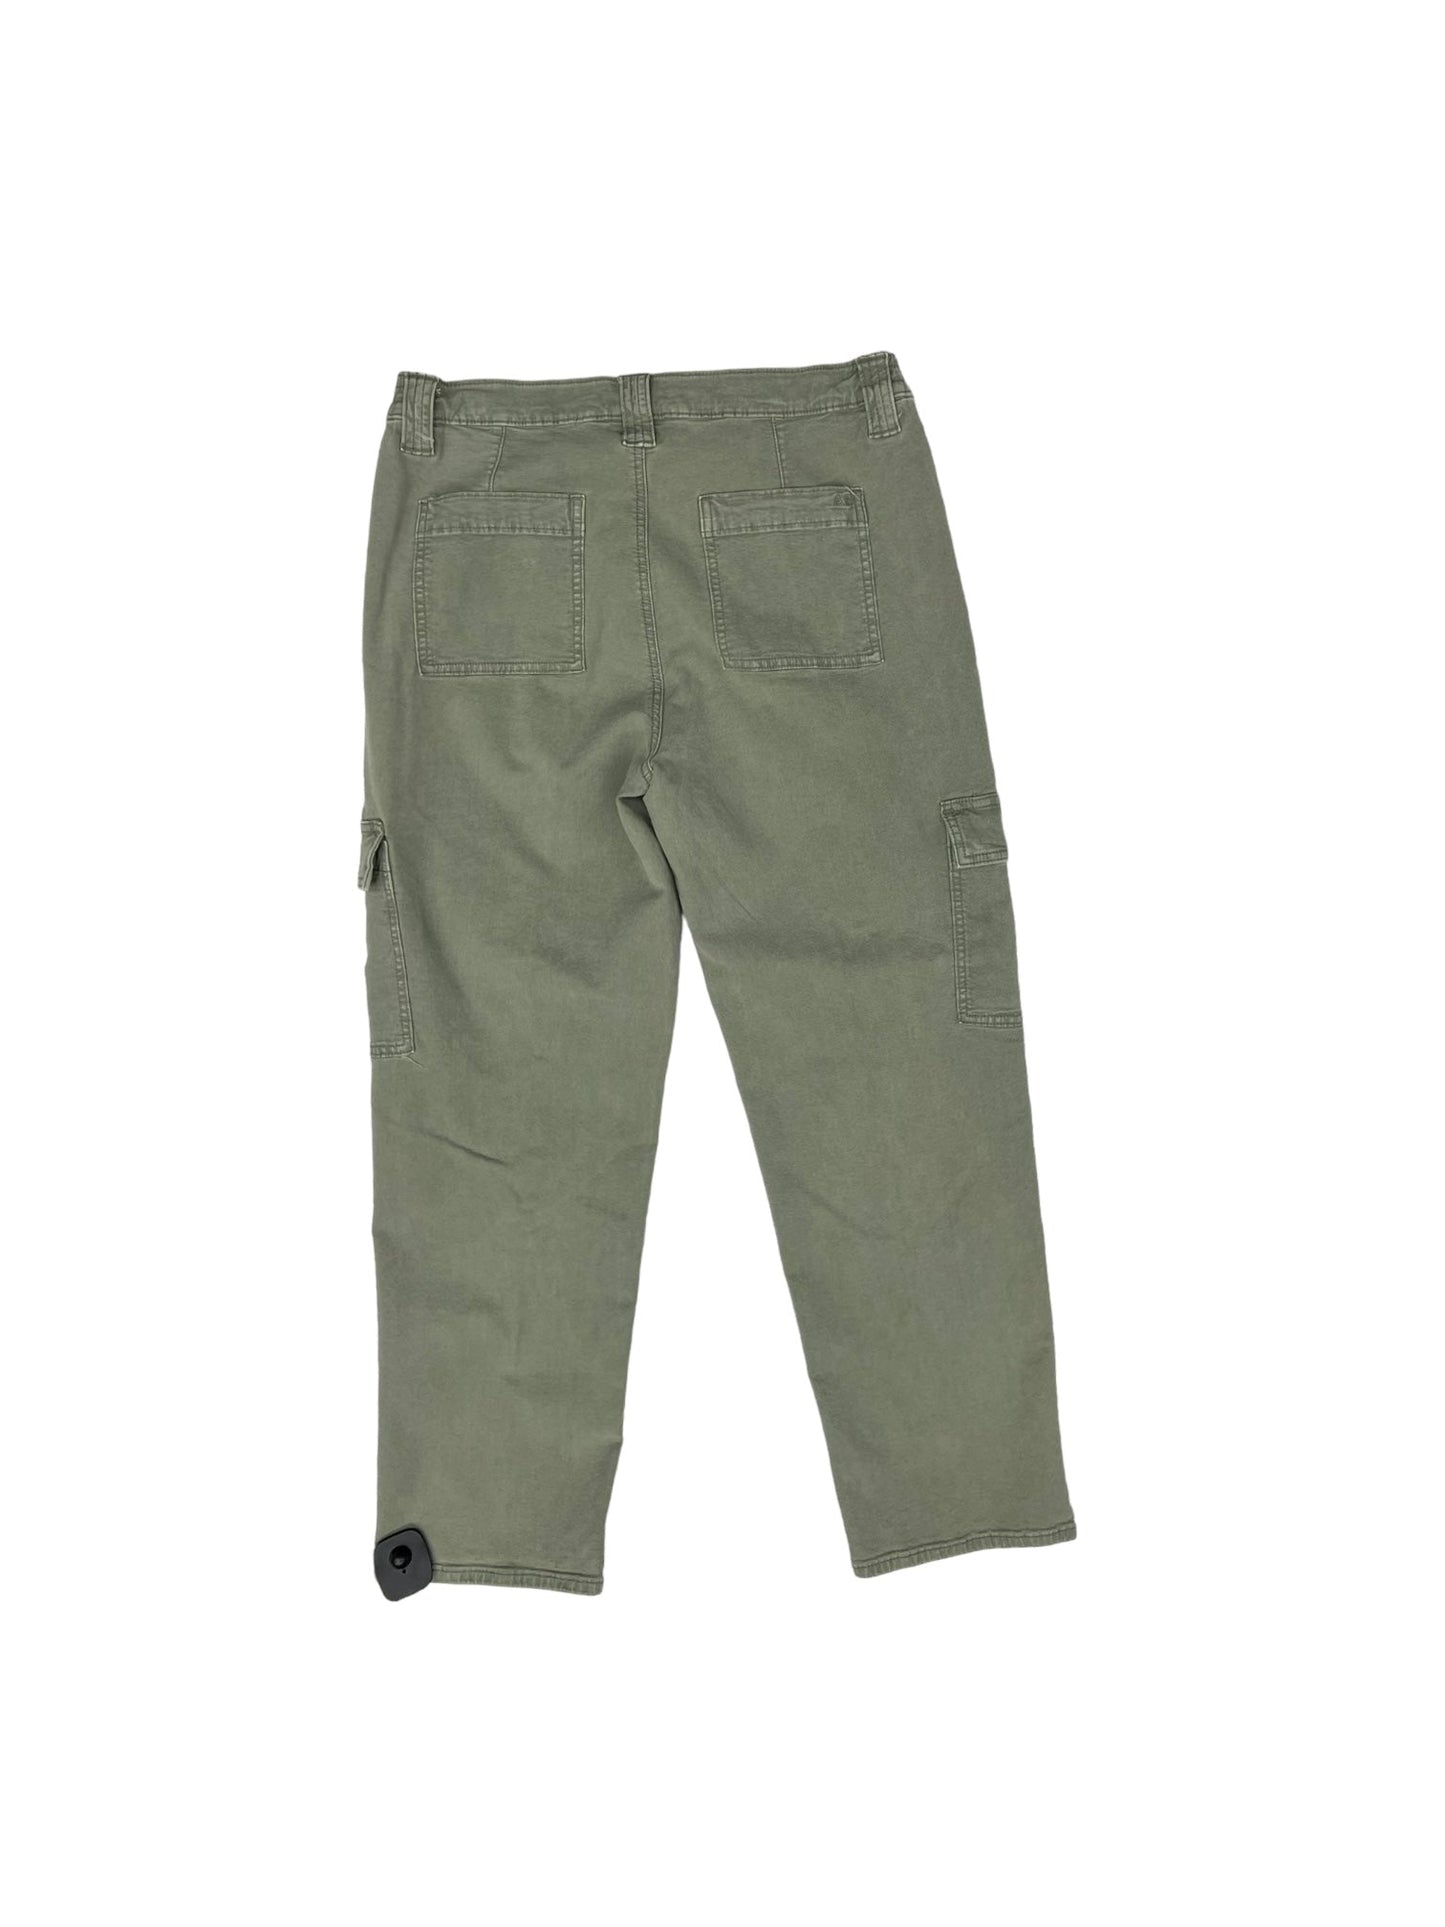 Green Pants Cargo & Utility American Eagle, Size 10